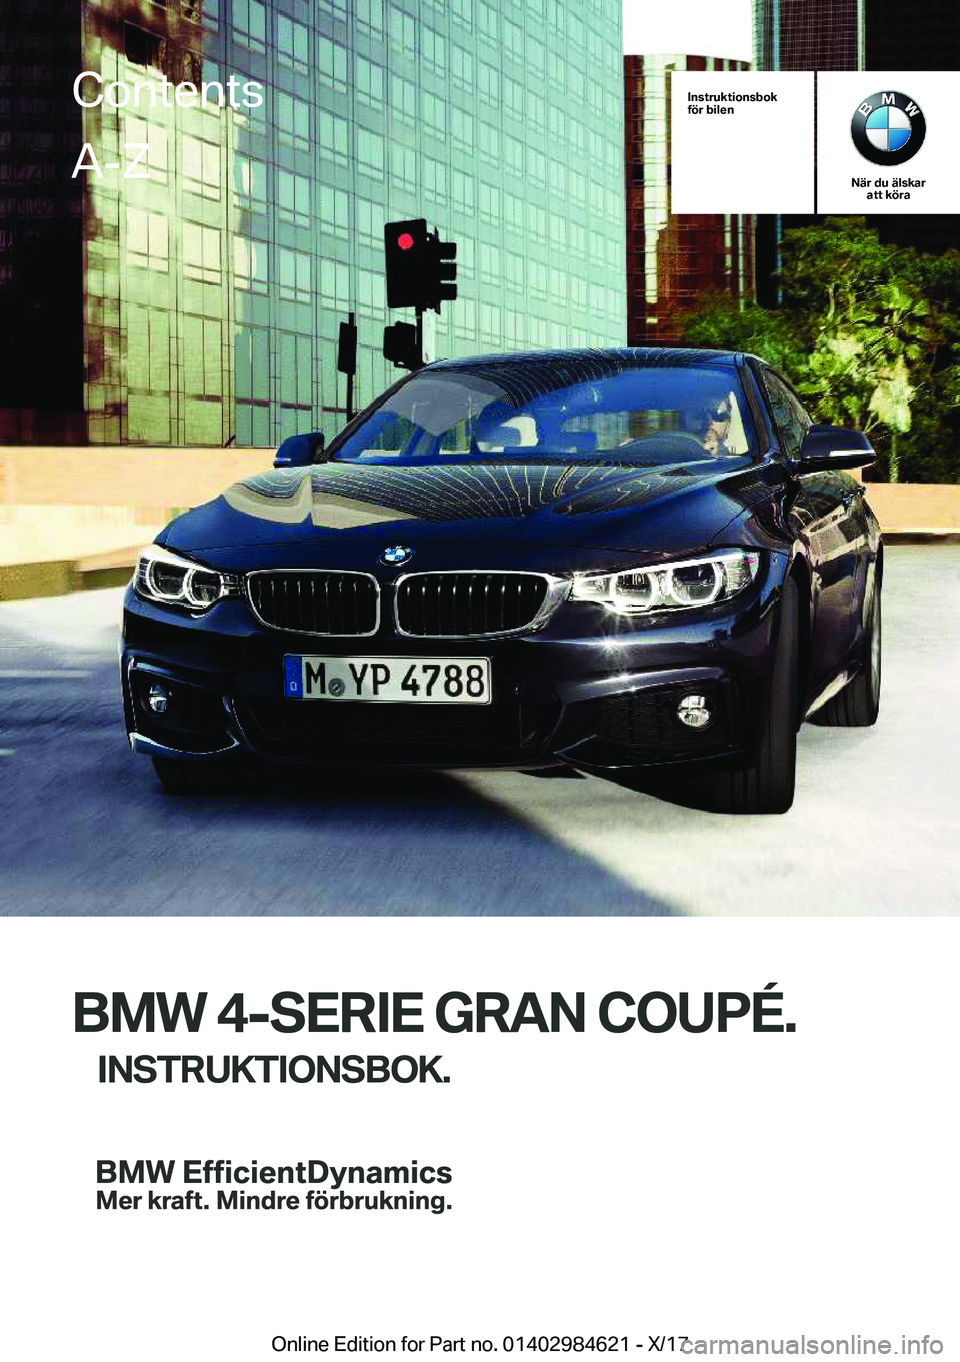 BMW 4 SERIES GRAN COUPE 2018  InstruktionsbÖcker (in Swedish) �I�n�s�t�r�u�k�t�i�o�n�s�b�o�k
�f�